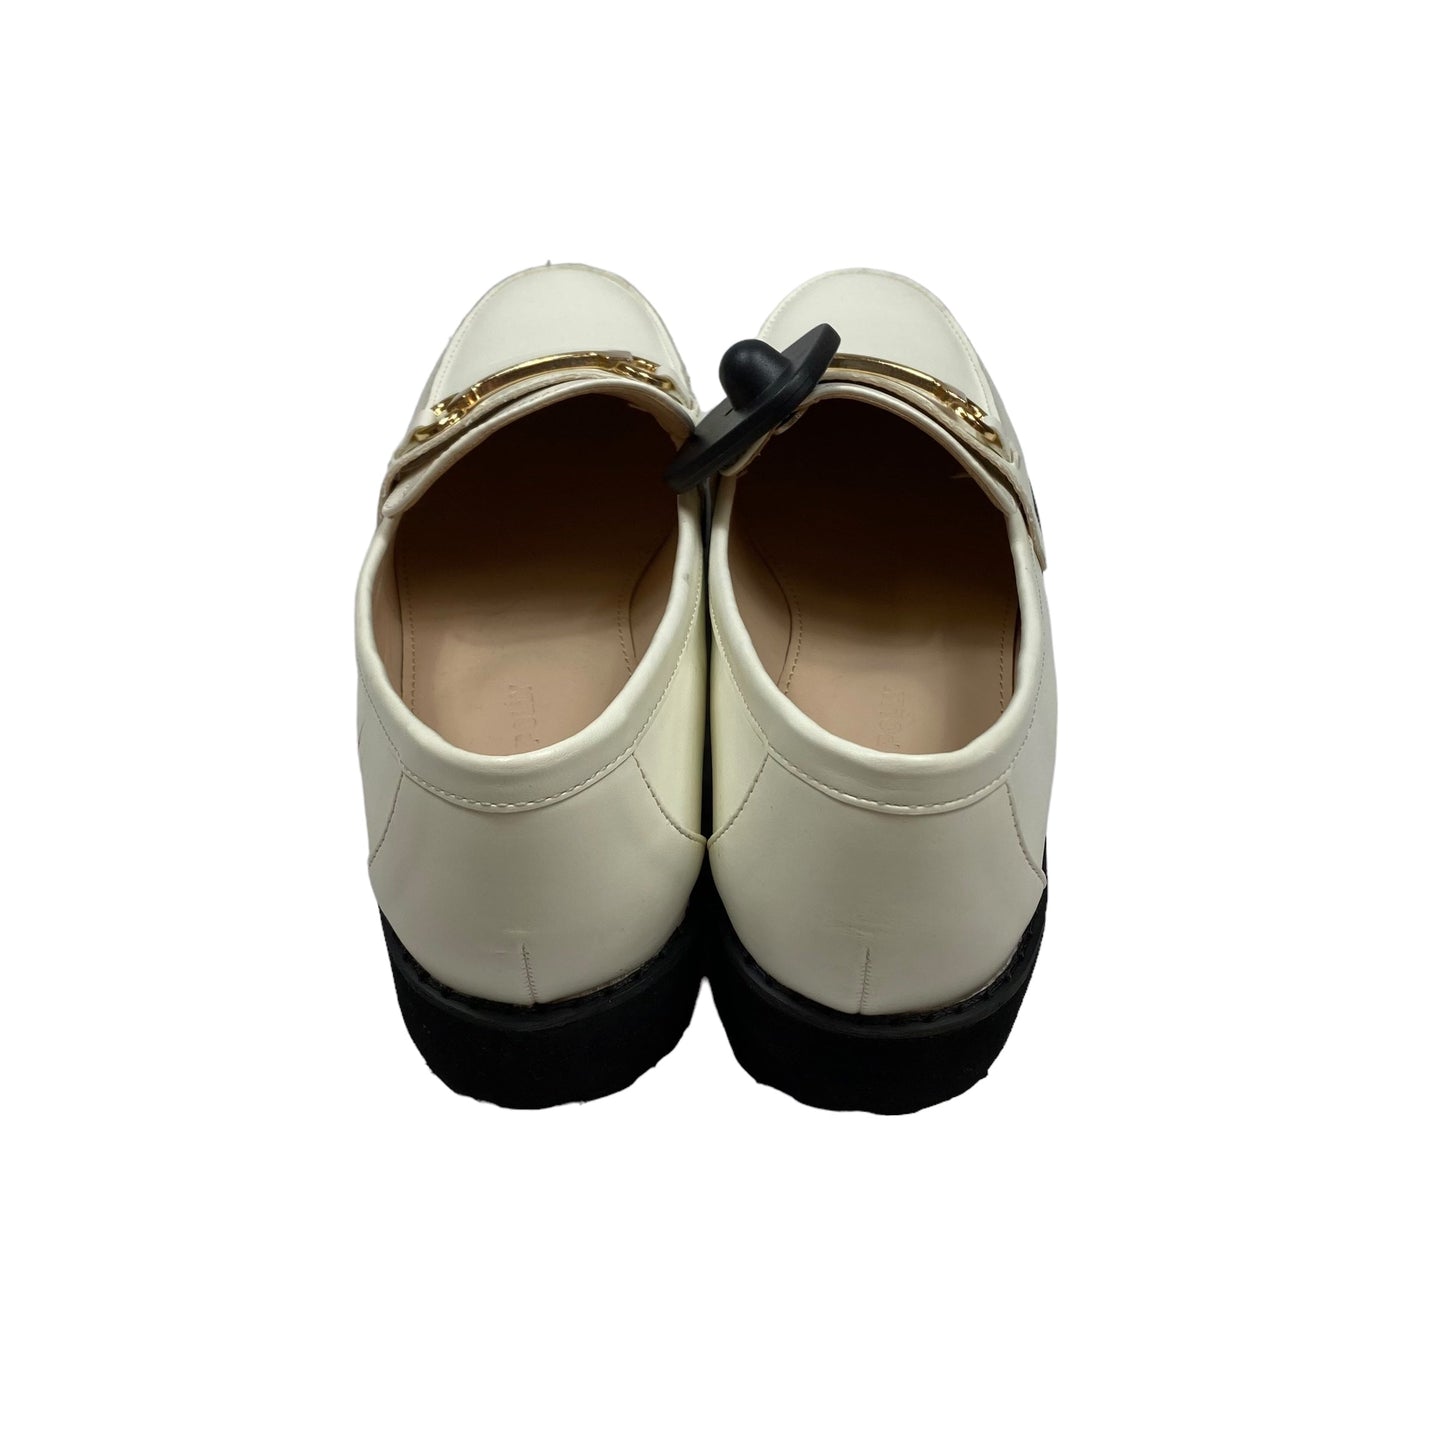 Cream Shoes Flats Princess Polly, Size 9